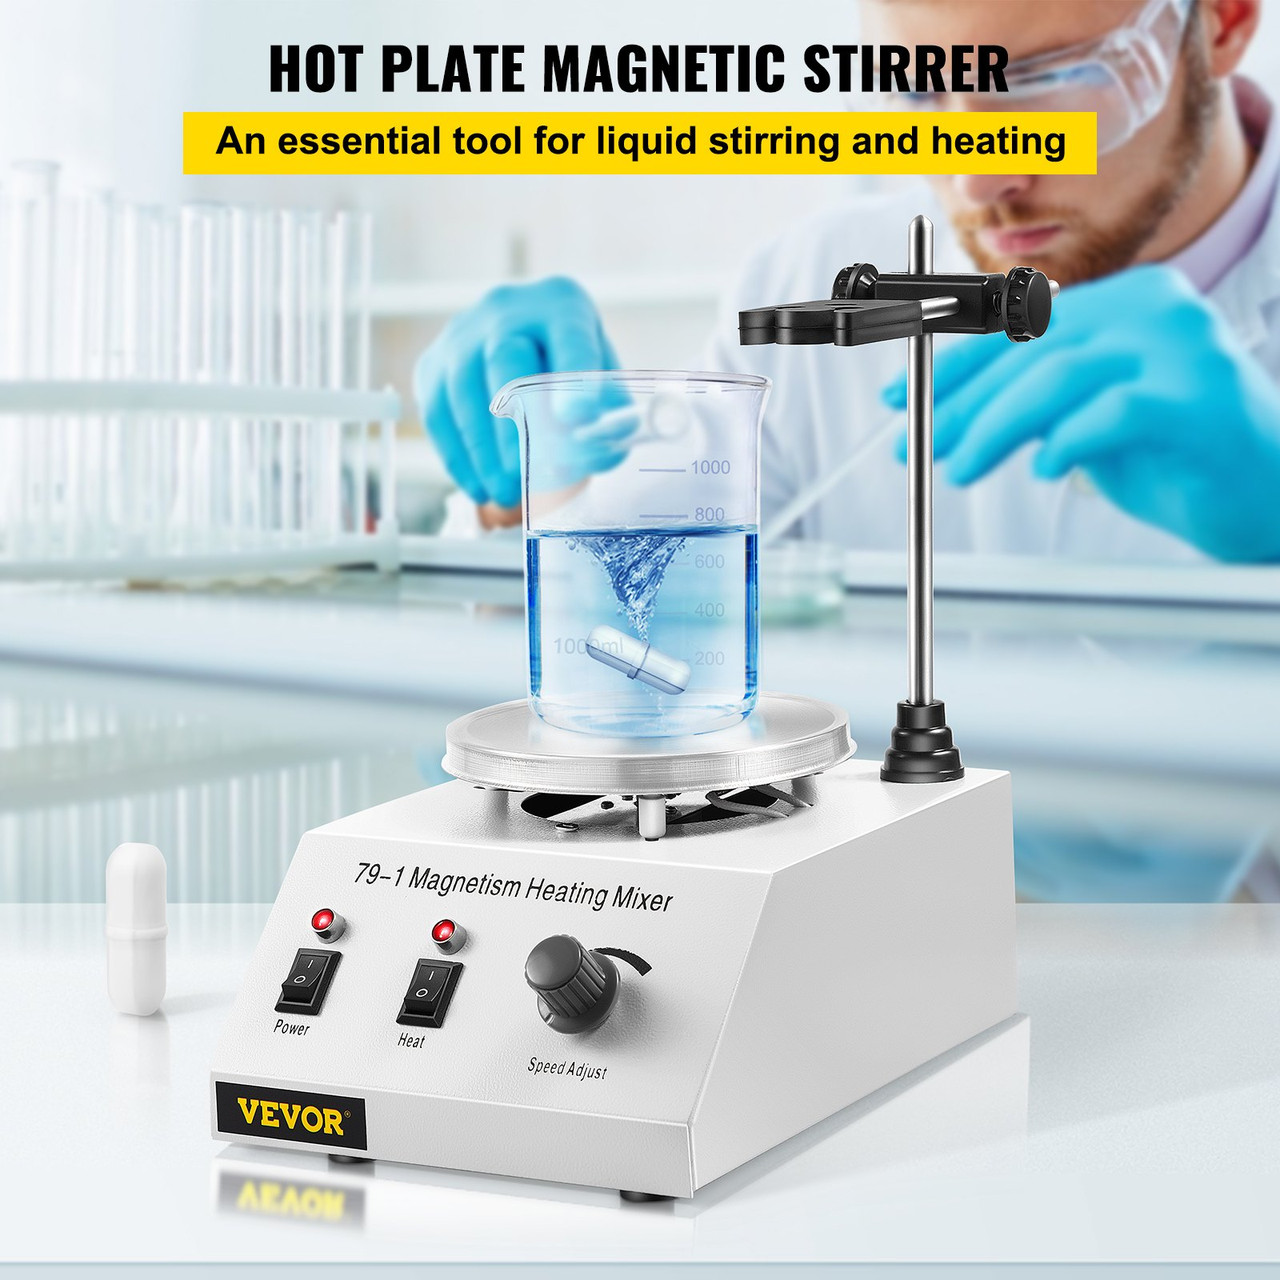 VEVOR Magnetic Stirrer 250W 158?/70? Heating Hot Plate with Magnetic Stirrer 0-1600 RPM Adjustable 1000ML Lab Magnetic Stirrer Mixer with Stand Support, Stirring Bar